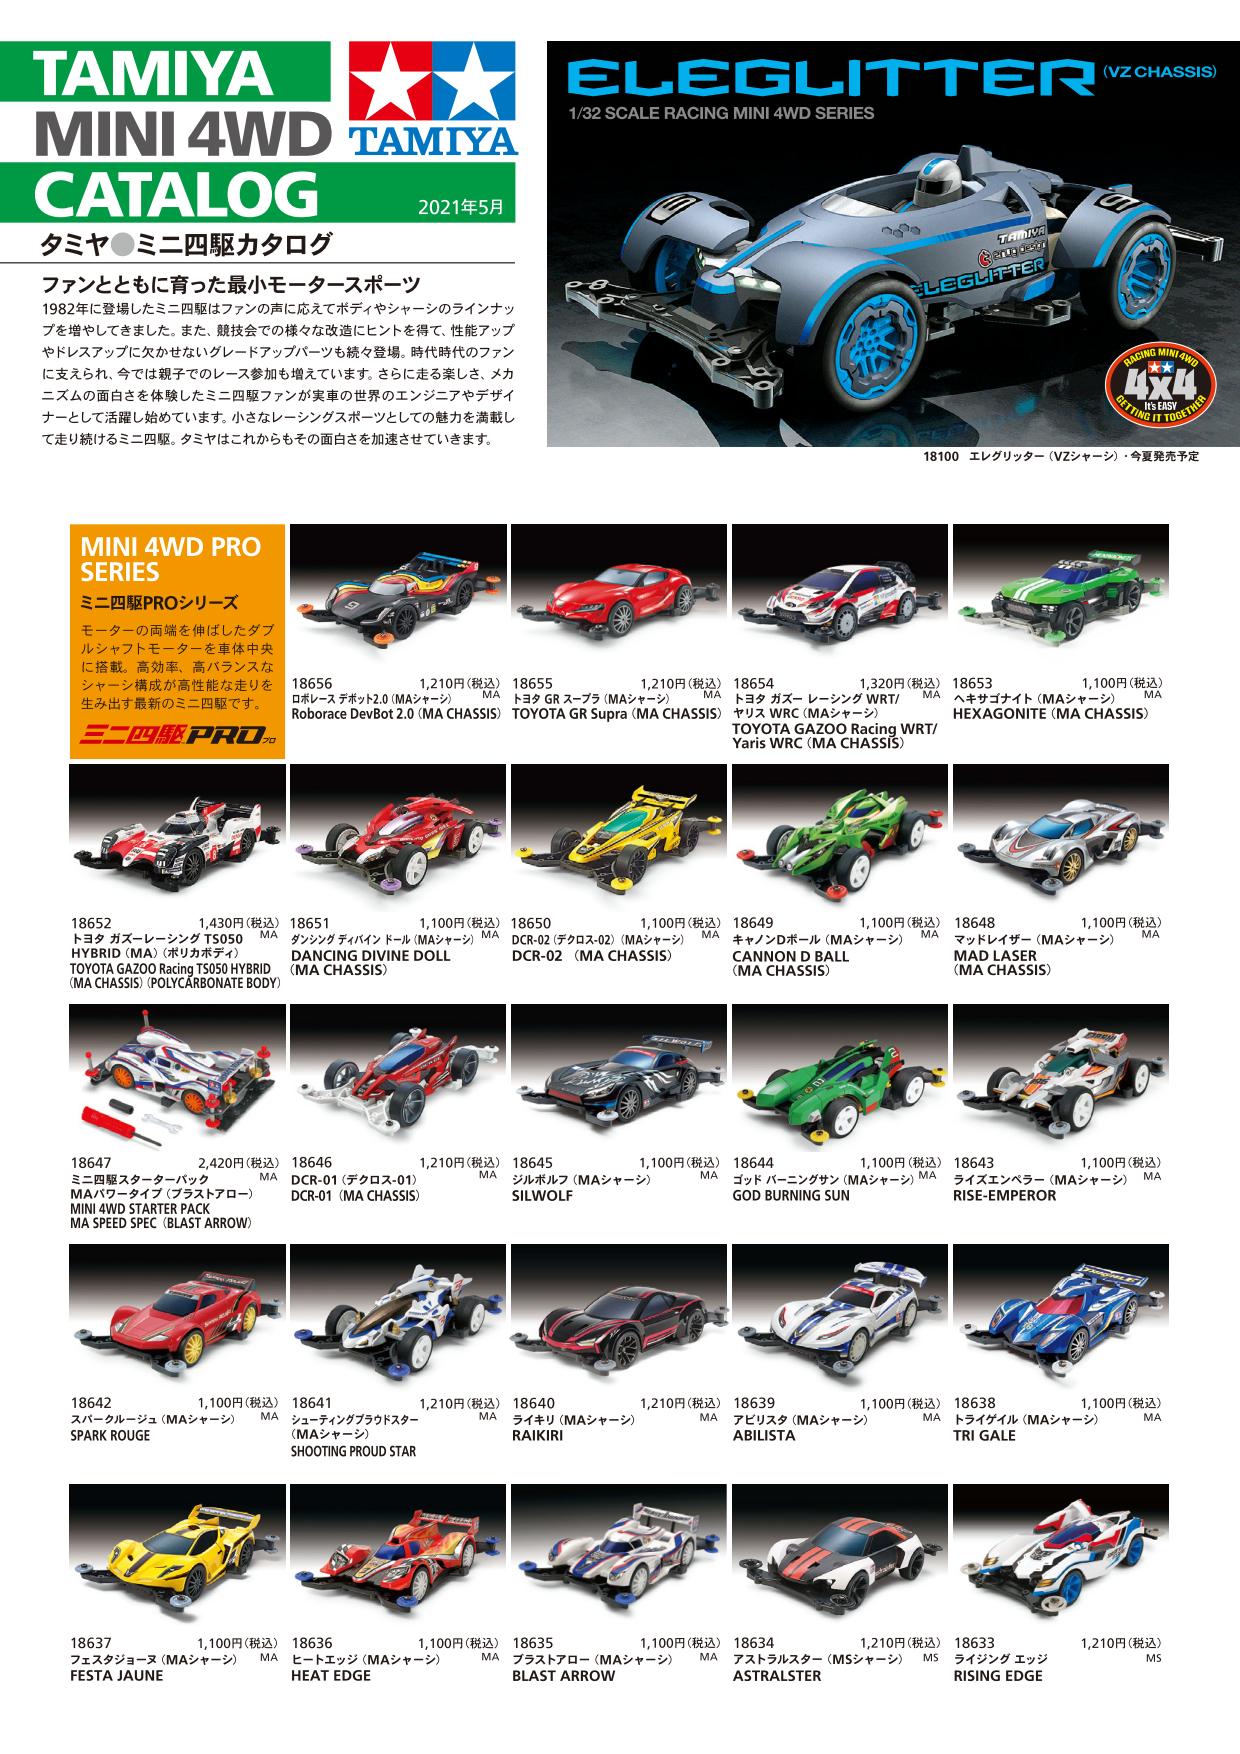 Tamiya Mini 4WD Catalogue 2022/5 for free download - TamiyaBlog